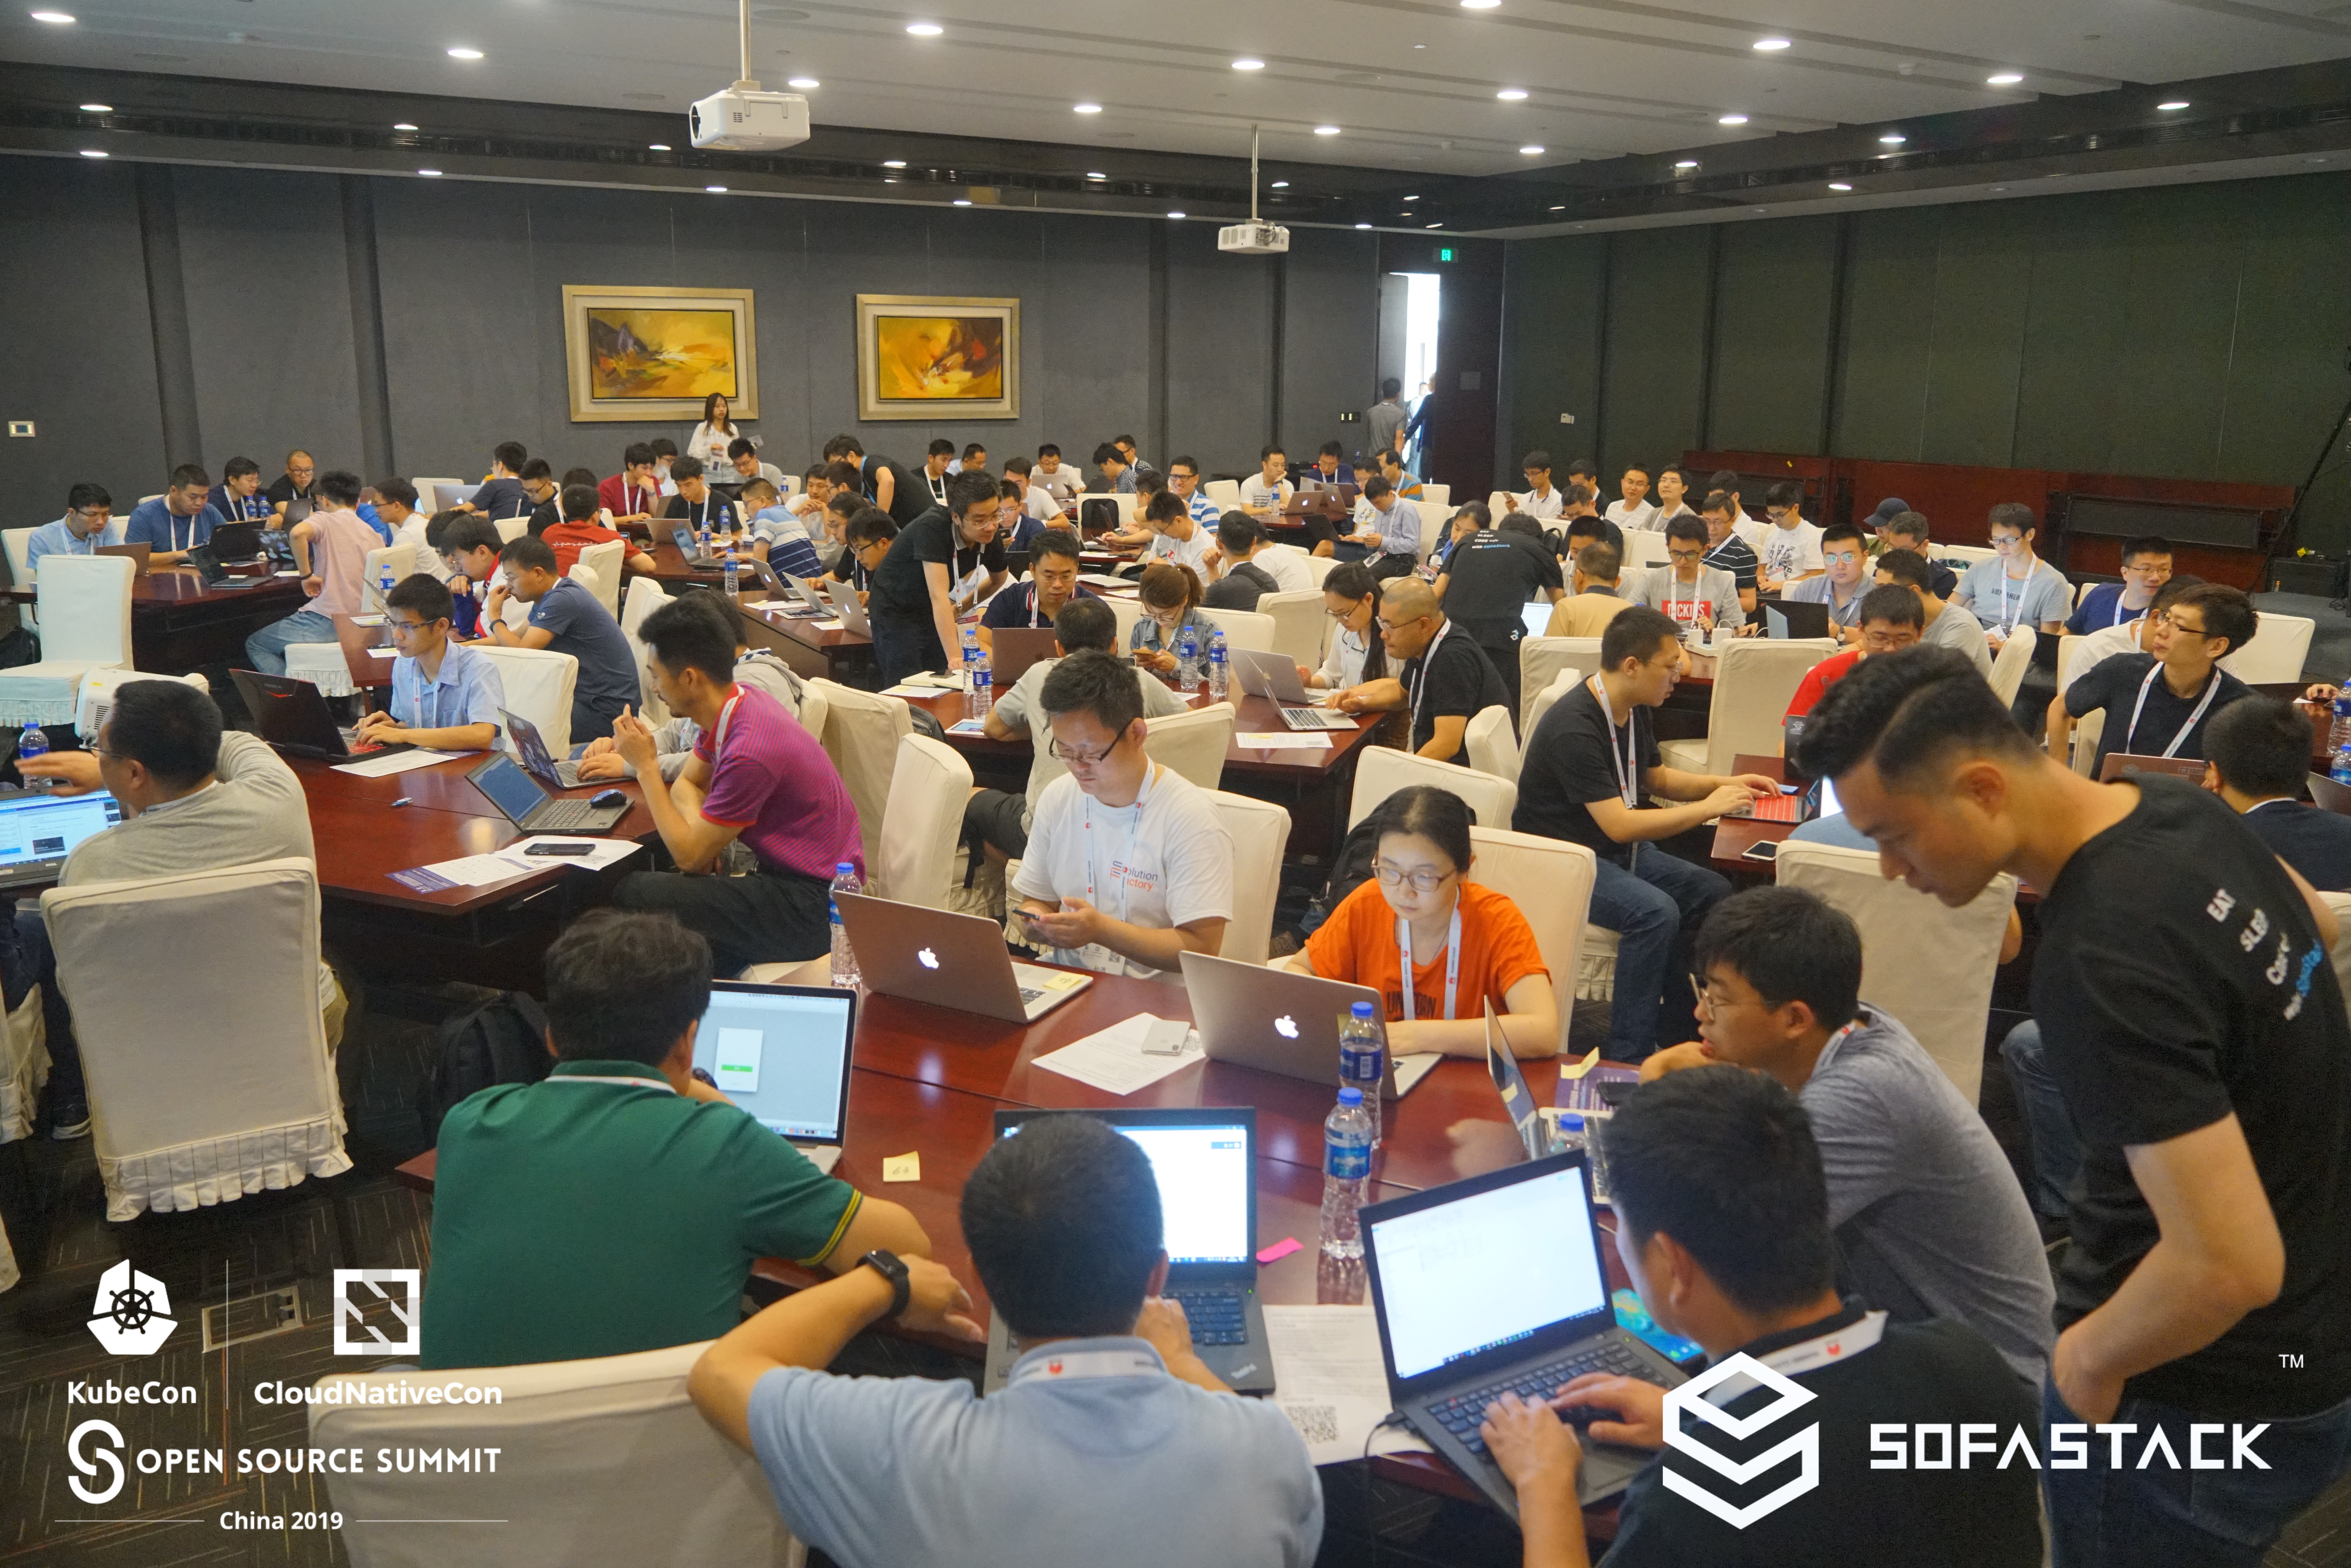 KubeCon 上海同场活动 SOFAStack Cloud Native Workshop 现场图